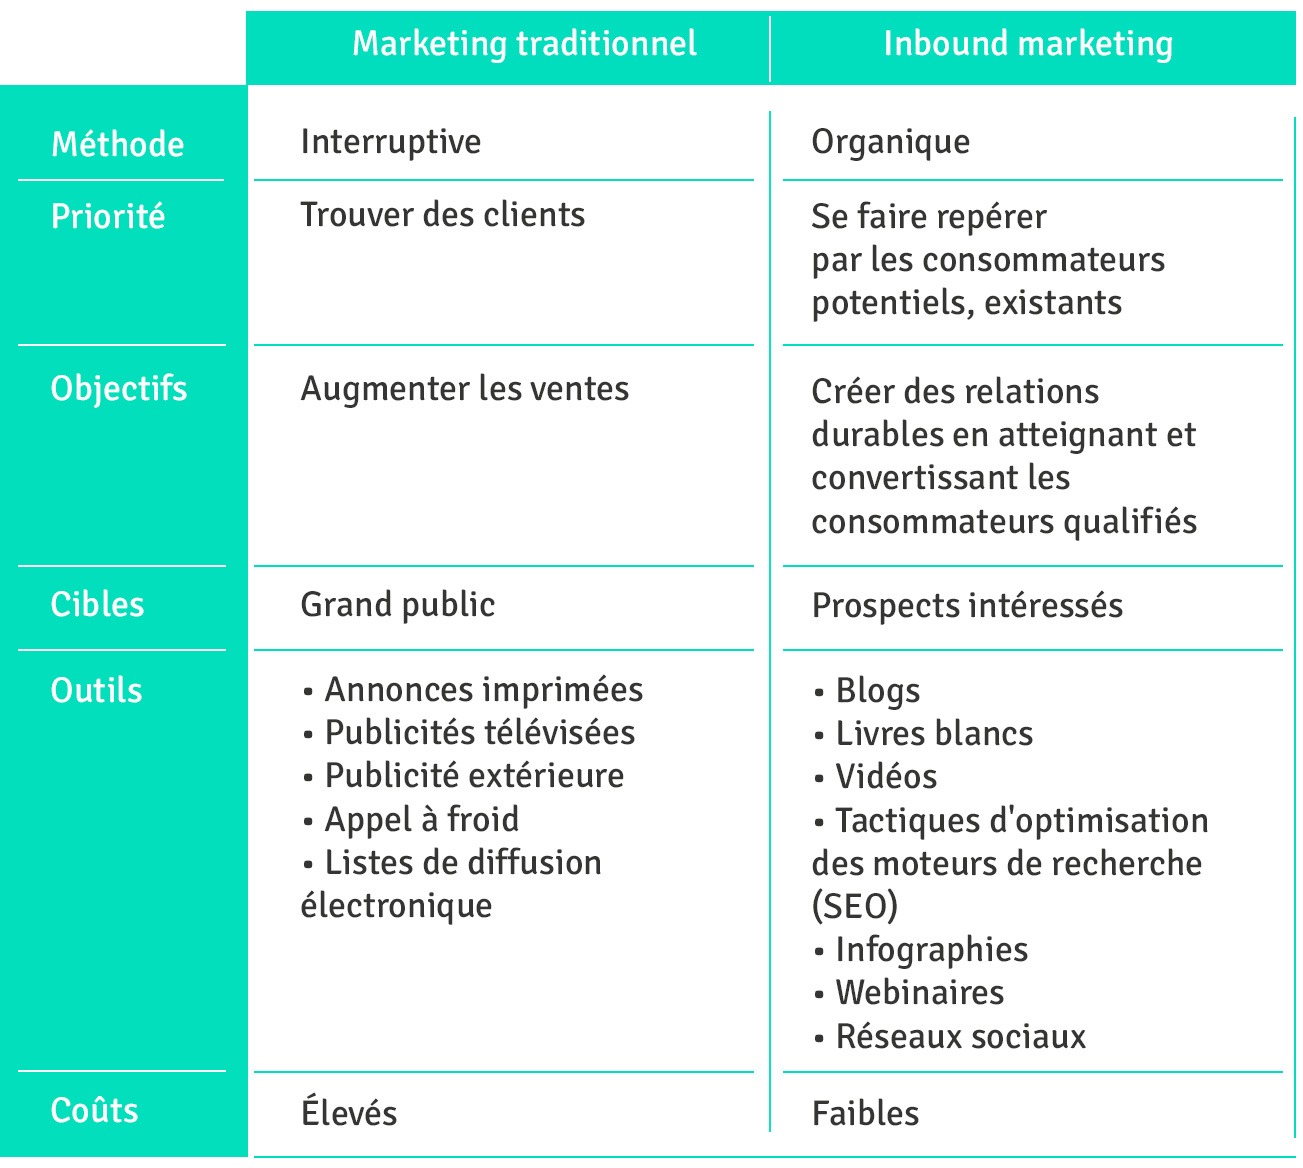 inbound marketing (méthode organique) versus marketing traditionnel (méthode interruptive) 